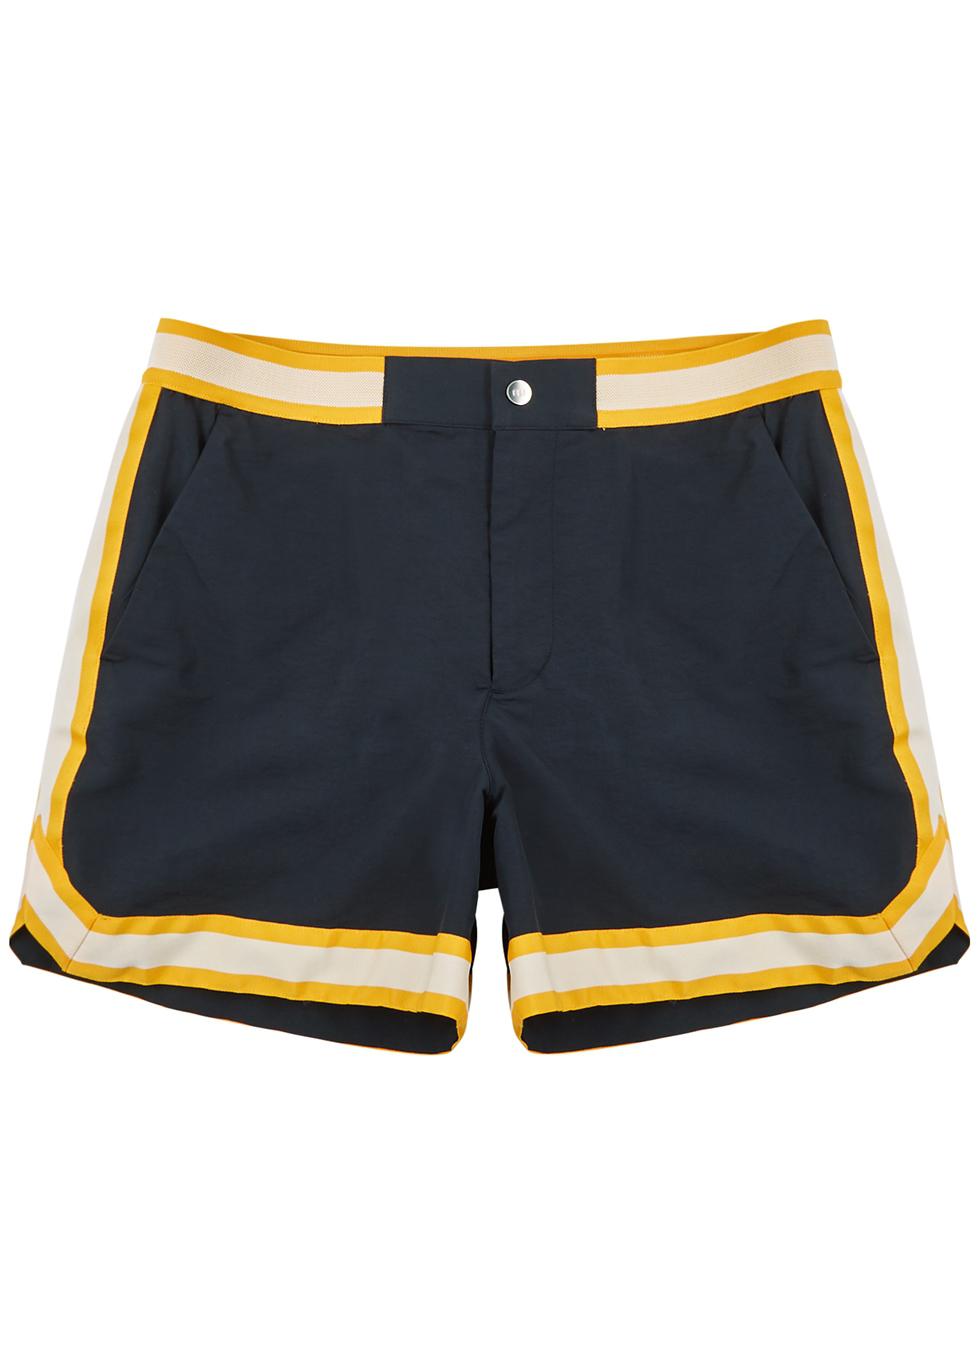 Baller navy striped swim shorts by CHE